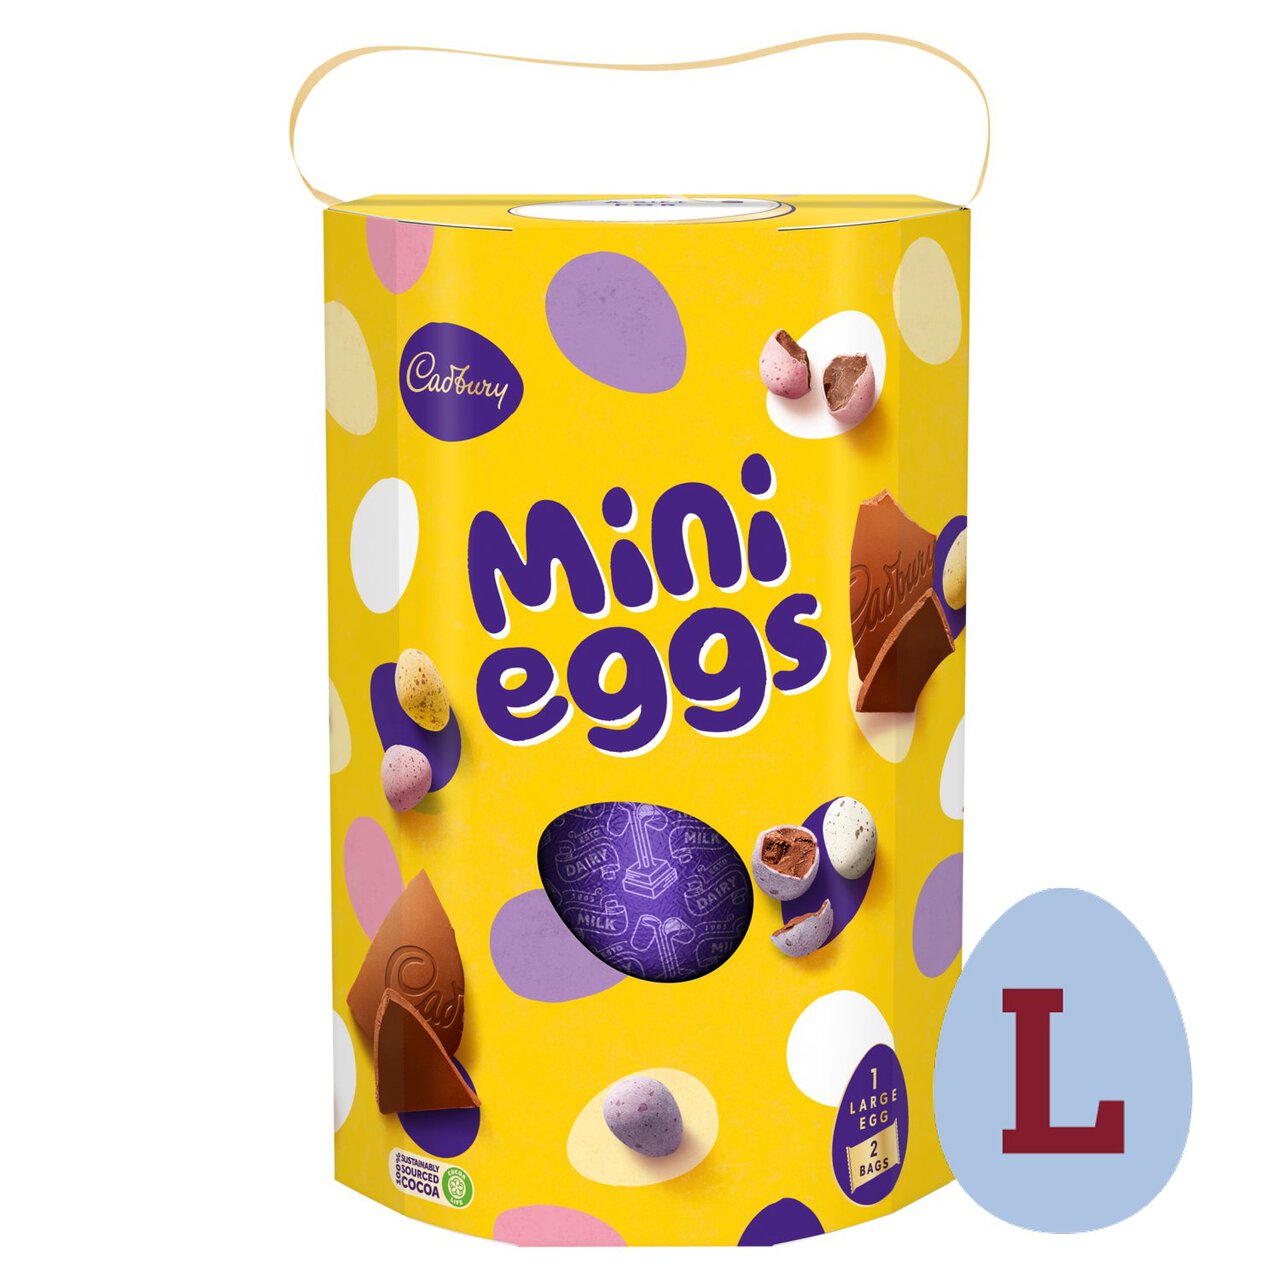 Cadbury Mini Eggs Egg 232g